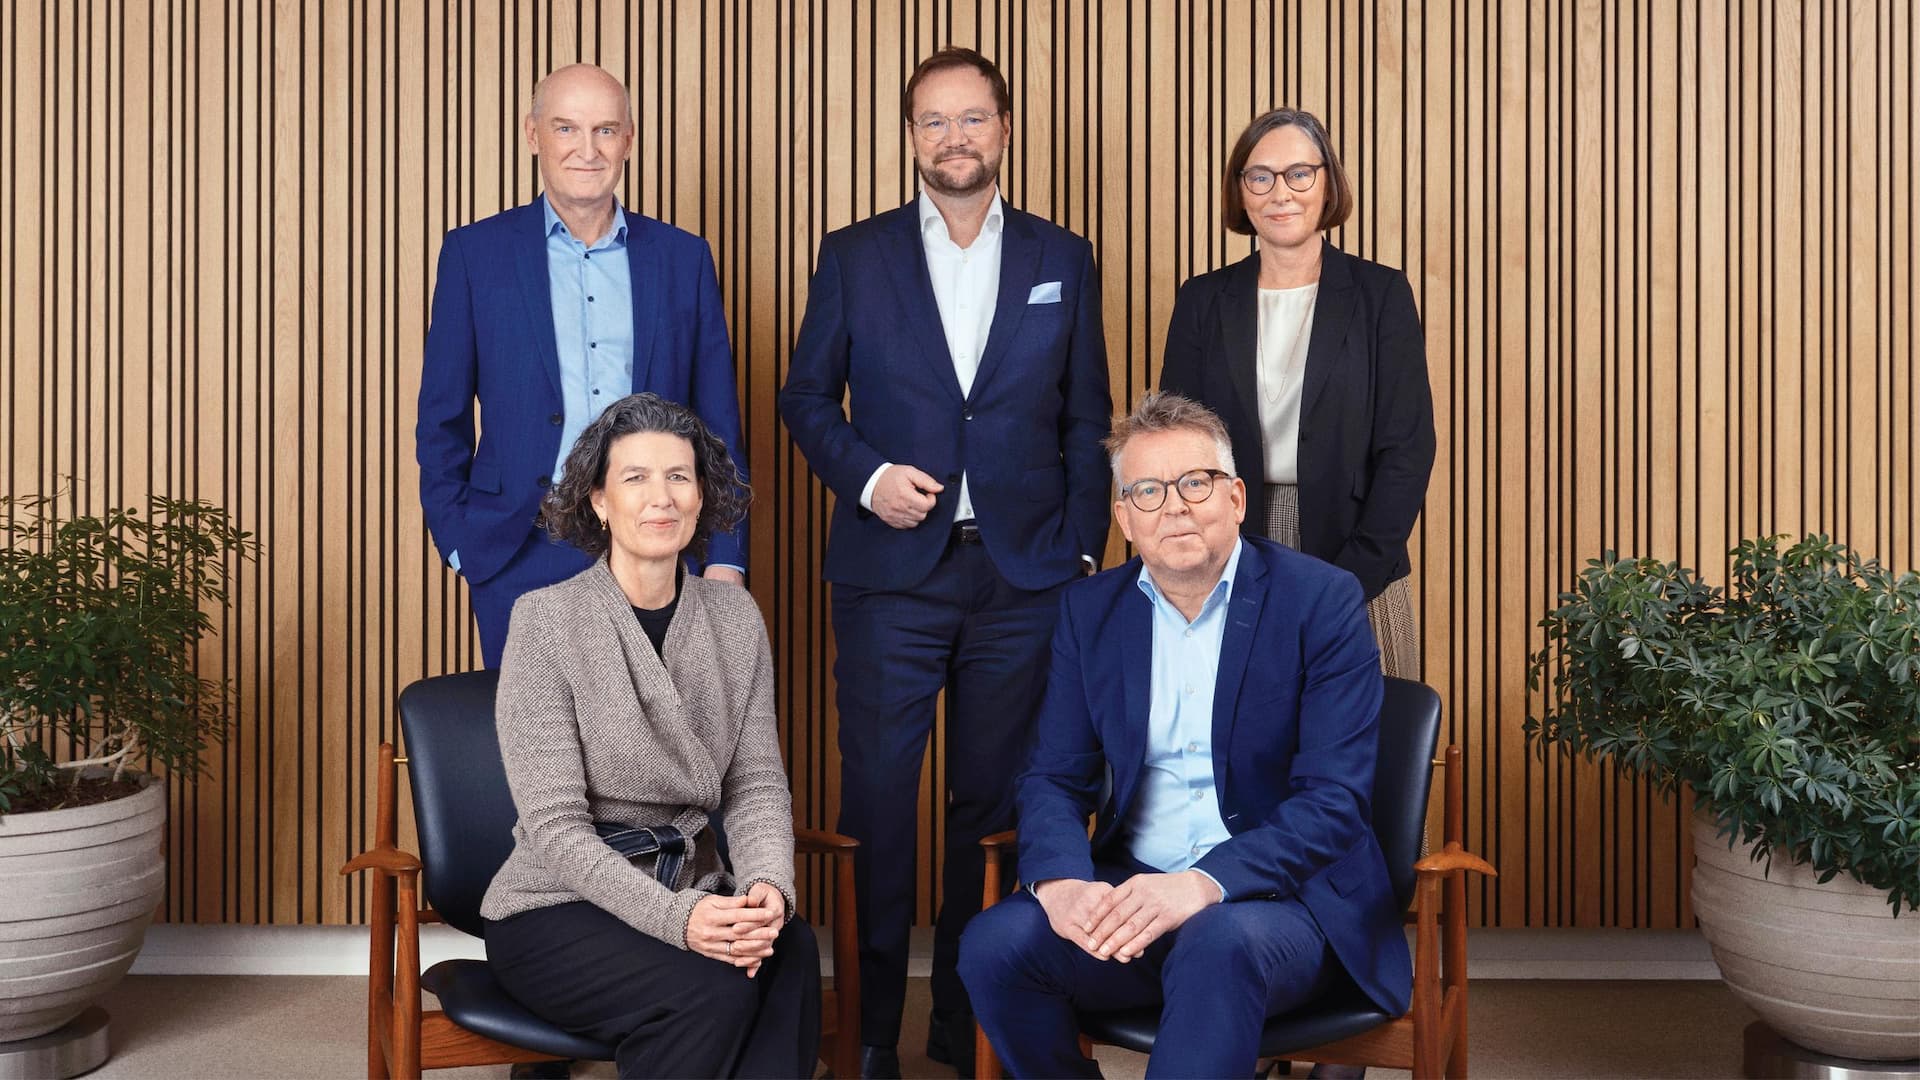 Group Executive Board
Back from left:
Peter Heymann Andersen
Jens-Peter Saul
Marianne Sørensen
Front from left:
Lone Tvis
Michael Simmelsgaard